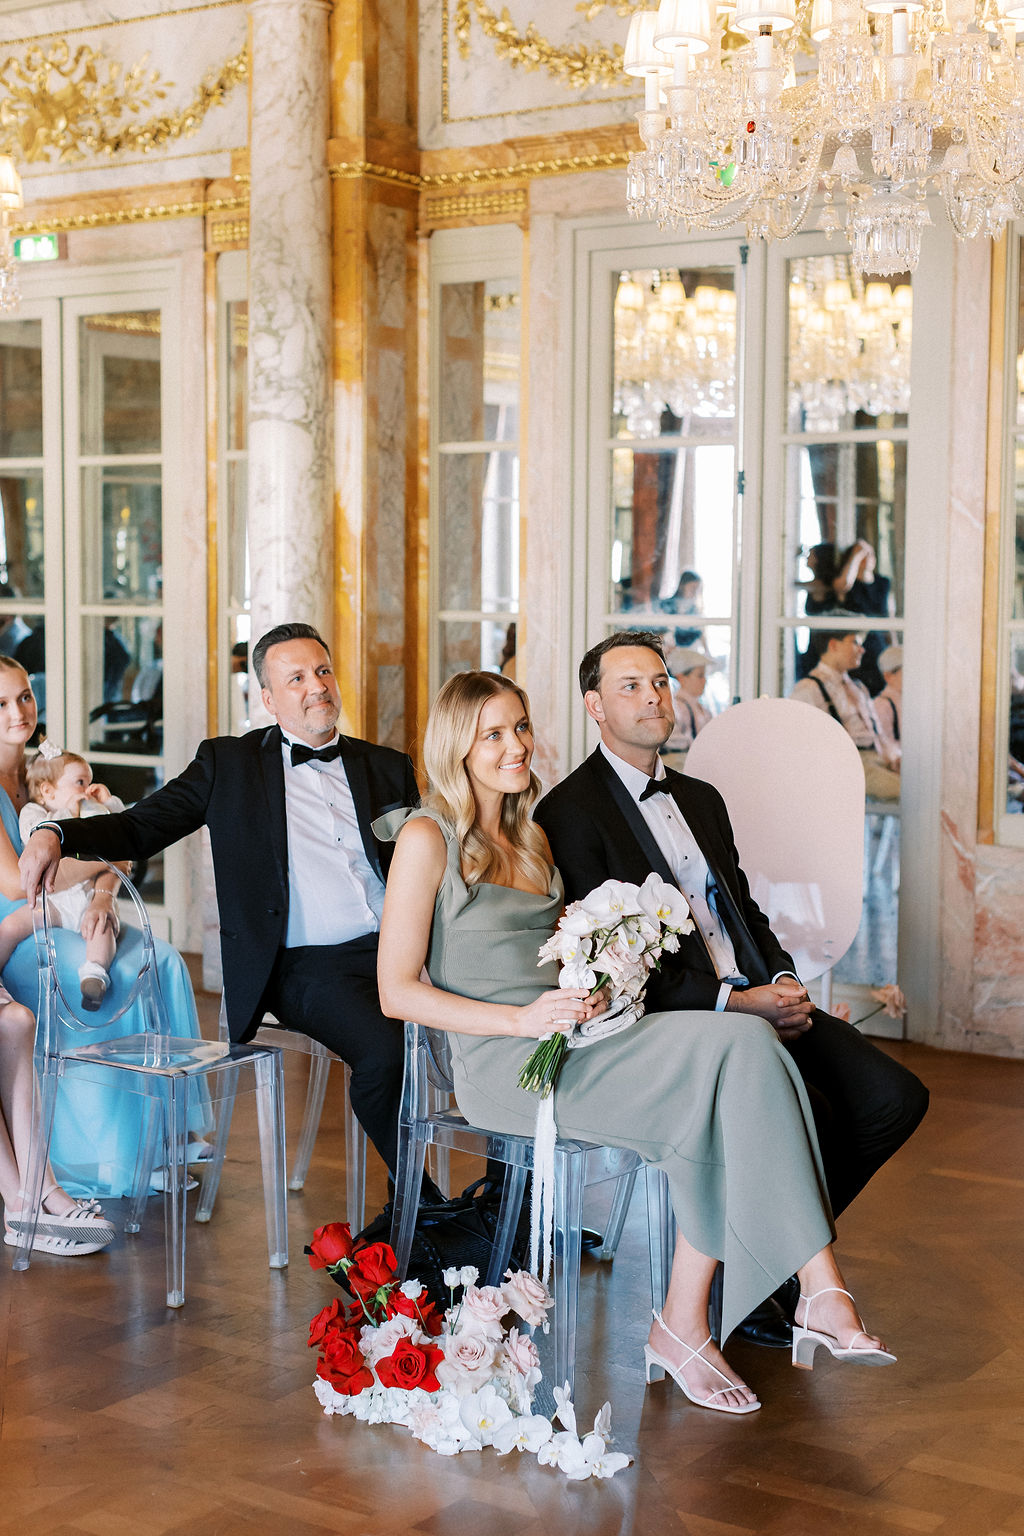 Luxury surprise wedding ceremony in Bordeaux France 